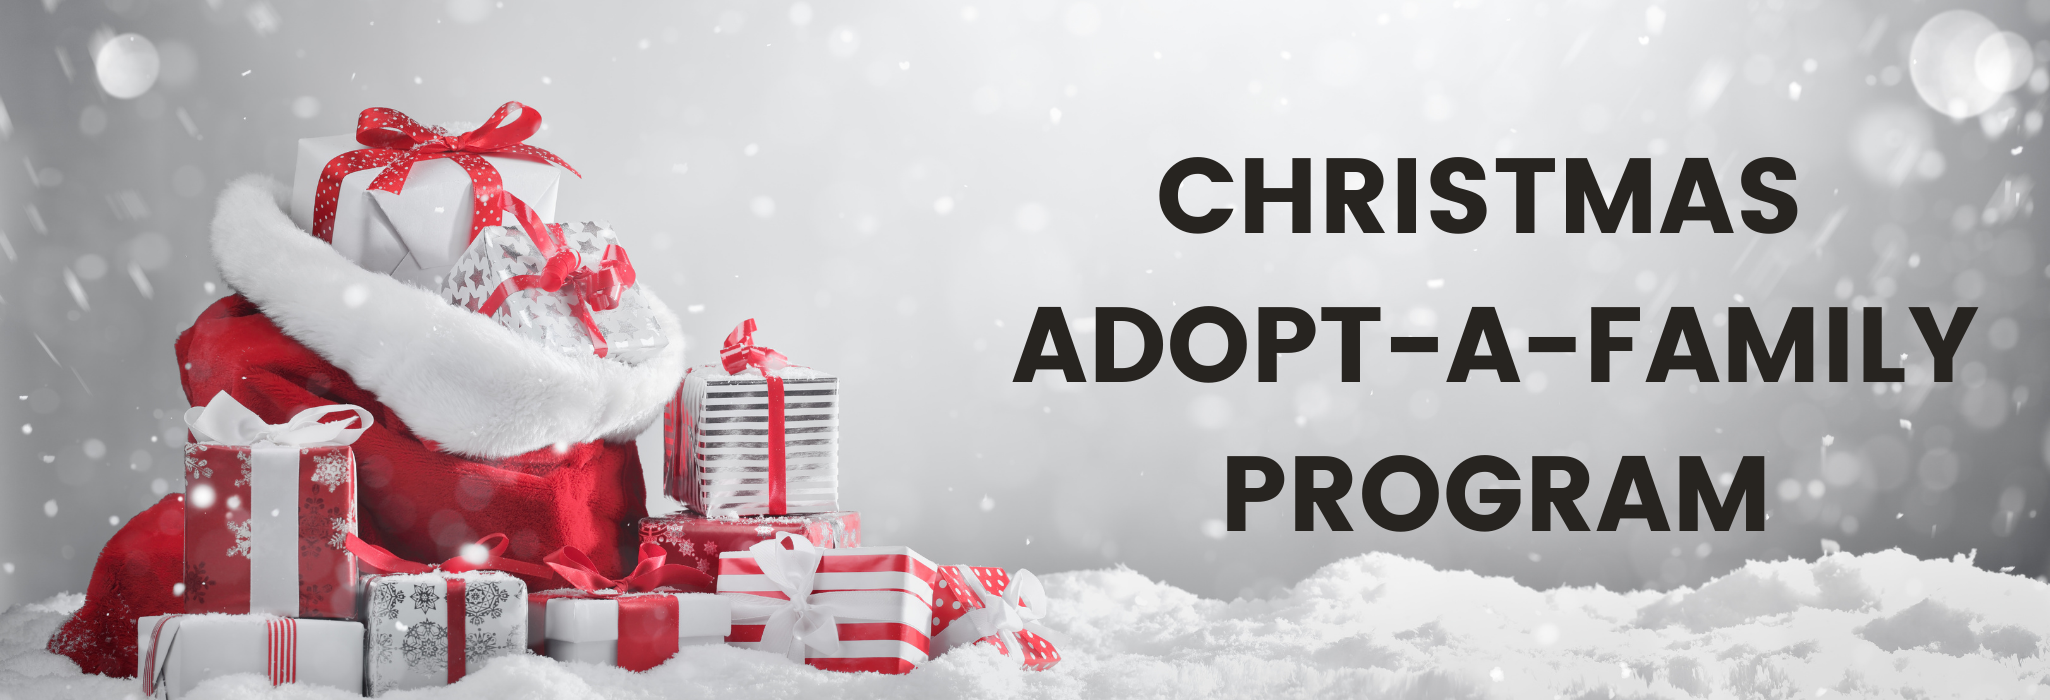 Christmas Adopt-a-Family Program - TriCity Family Services